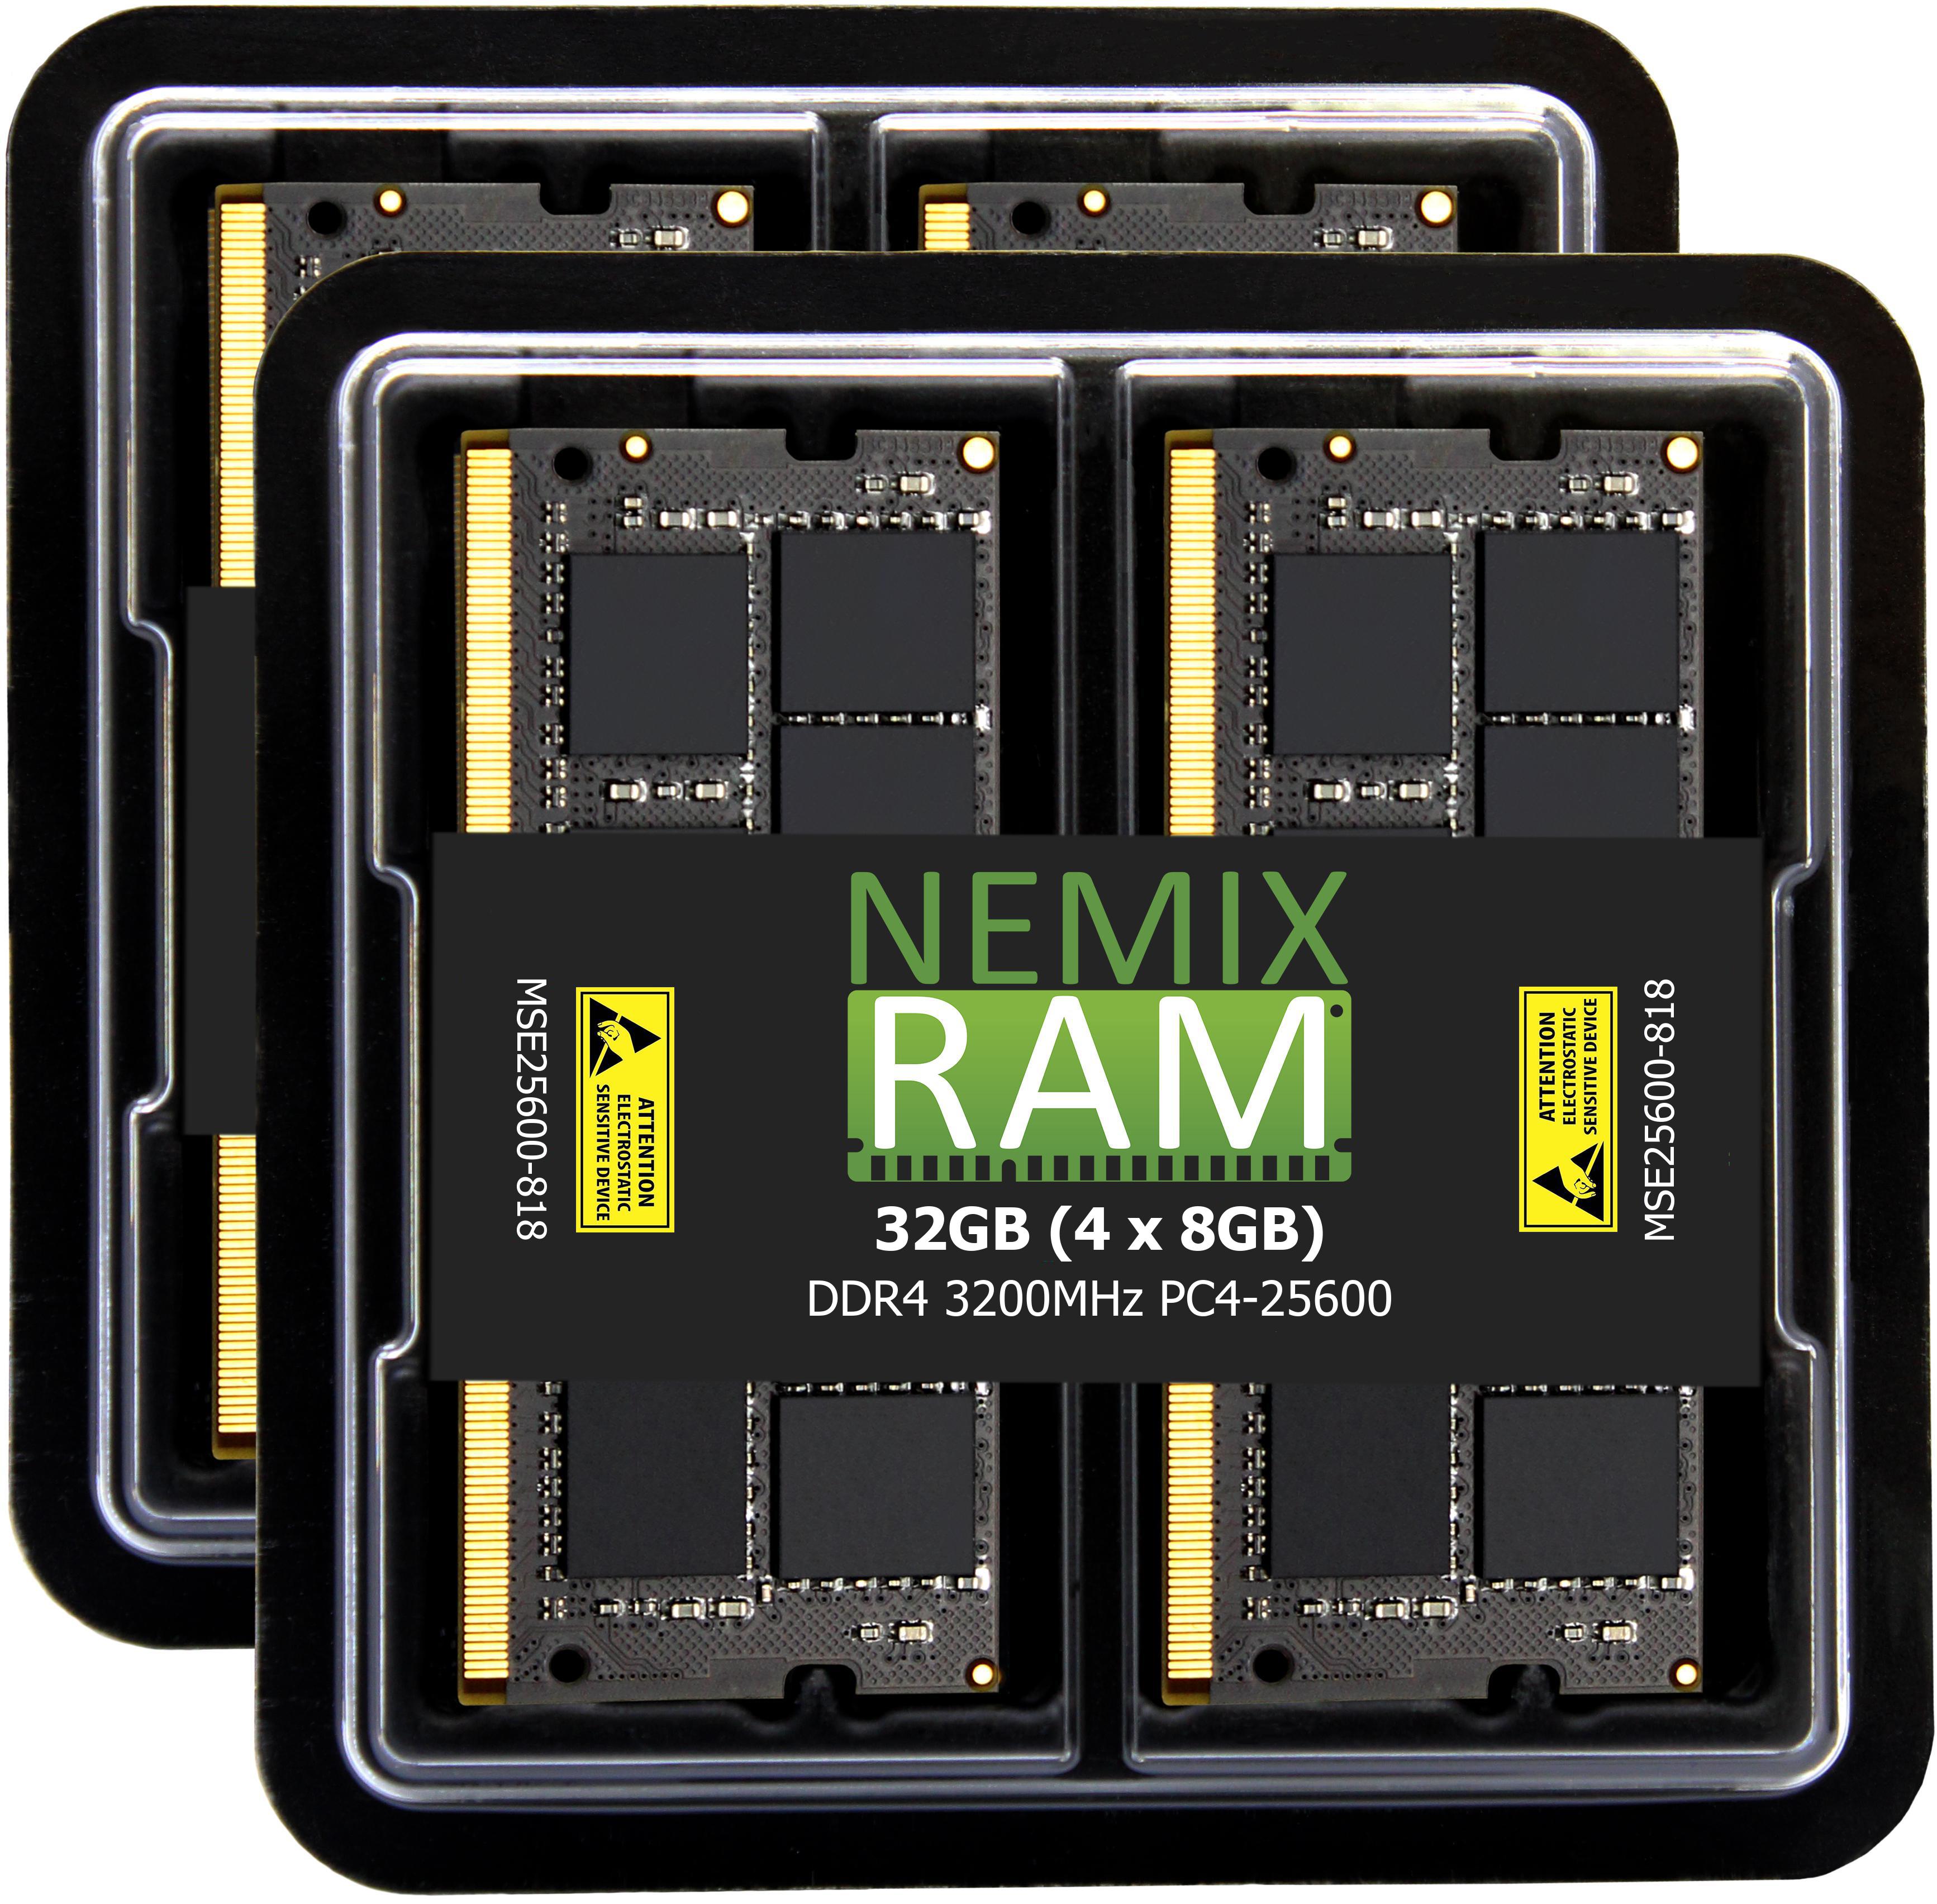 DDR4 3200MHZ PC4-25600 ECC SODIMM 2RX8